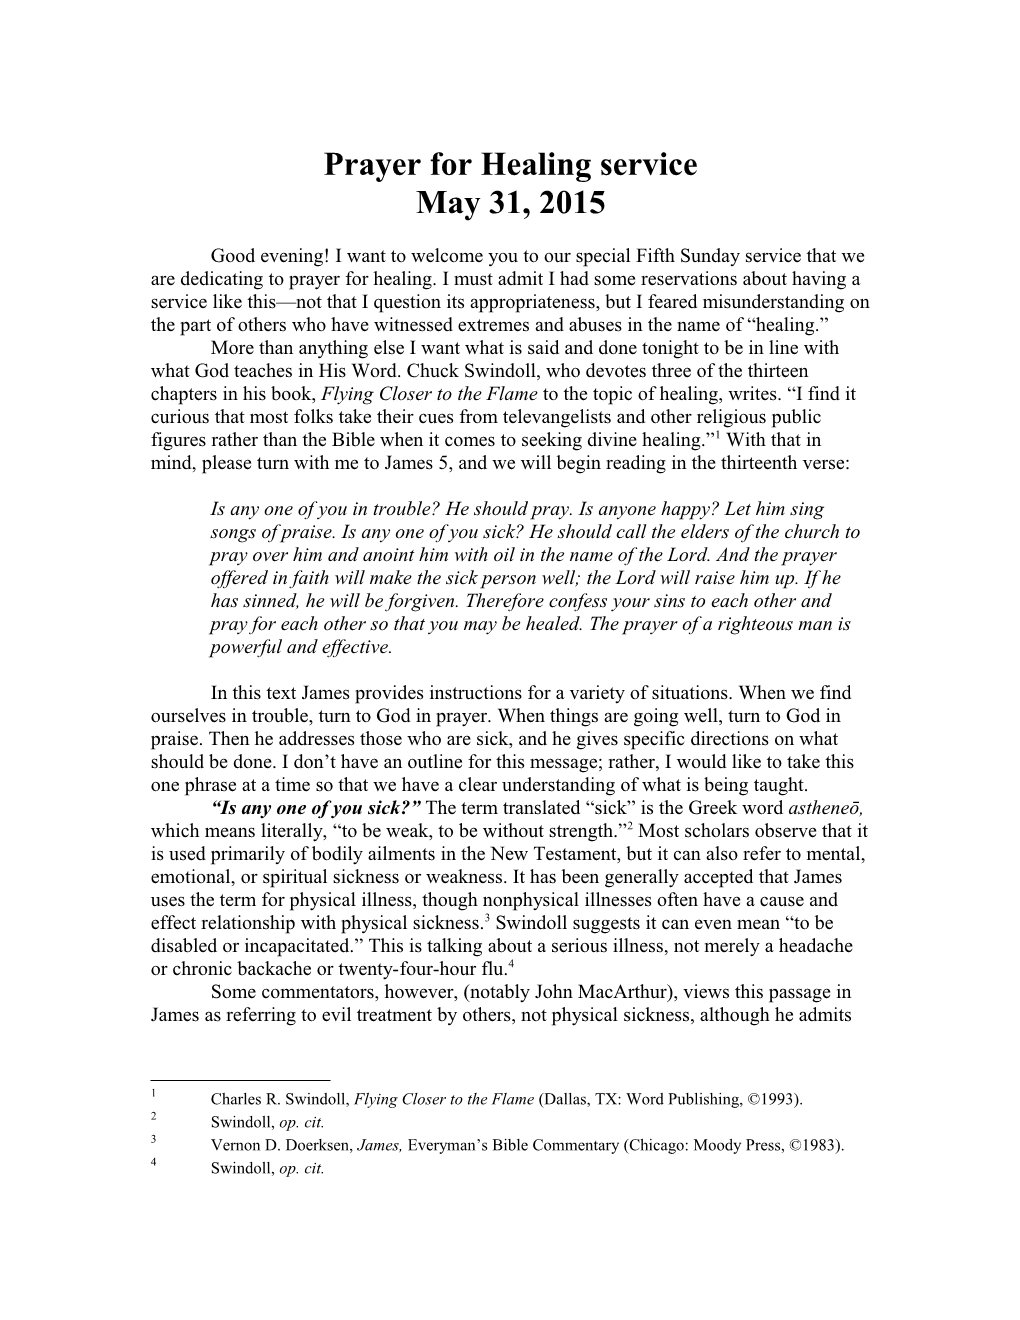 Prayer for Healing Service